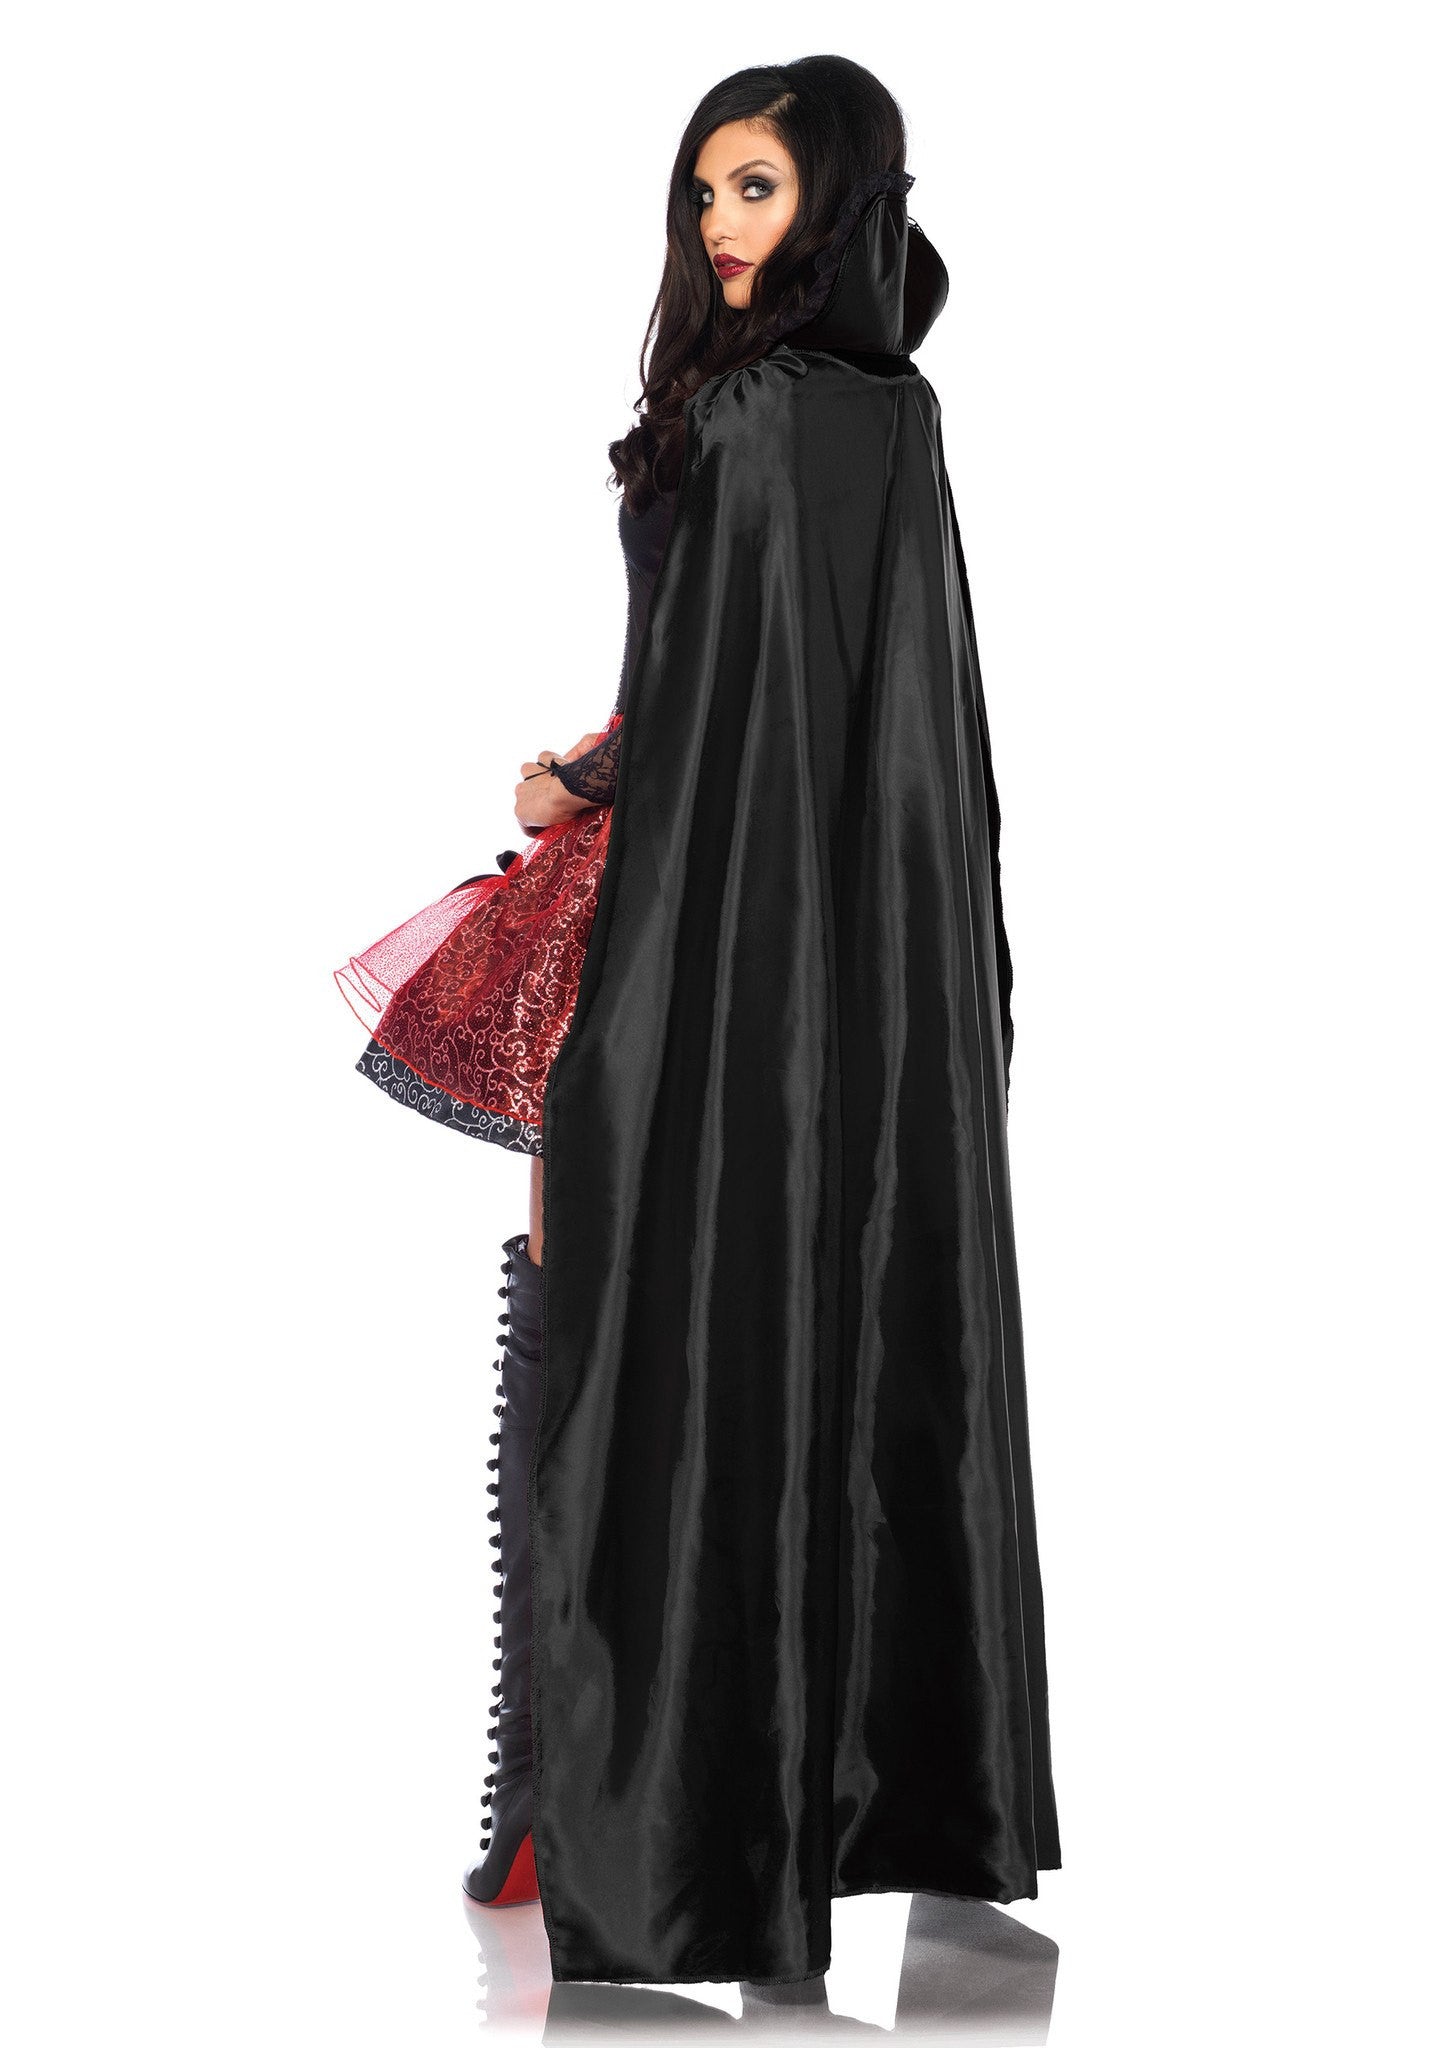 Costume - Vampire Temptress Costume